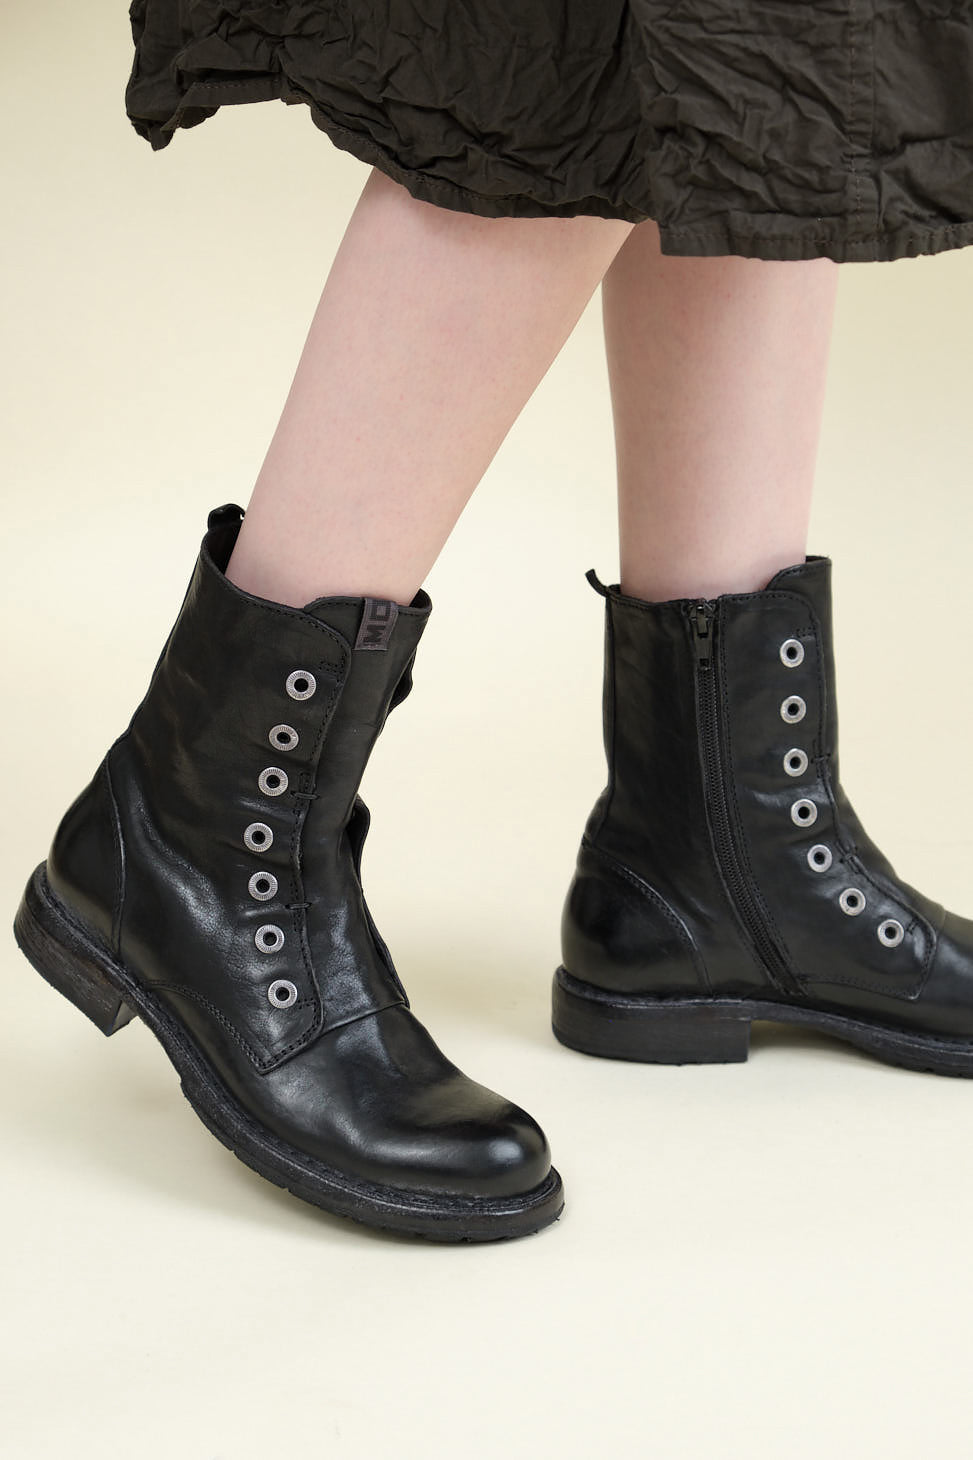 verwijderen voorspelling Onverenigbaar Moms Shoes Male Ankle Boot